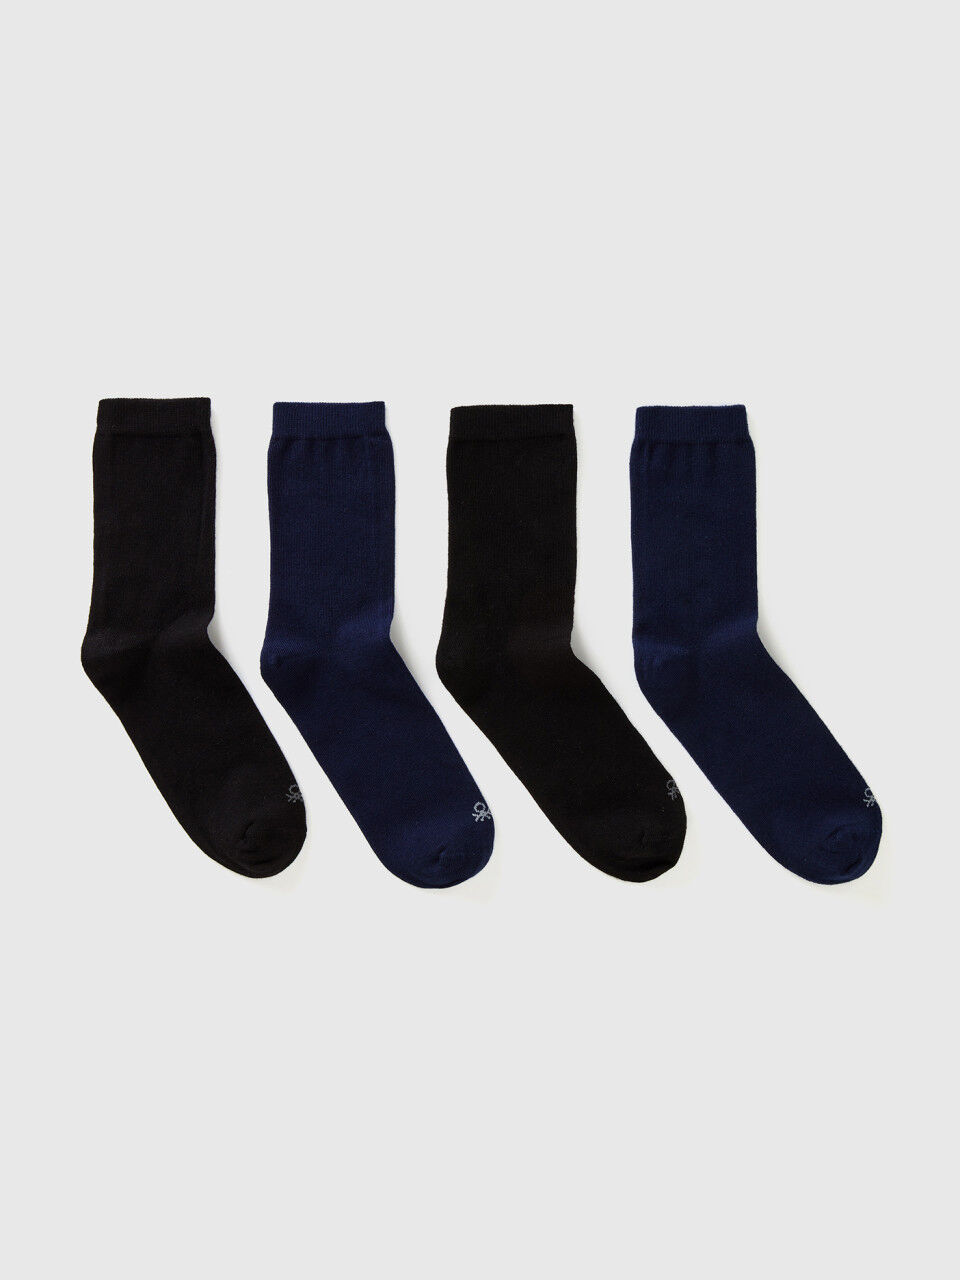 Socks set in organic cotton blend